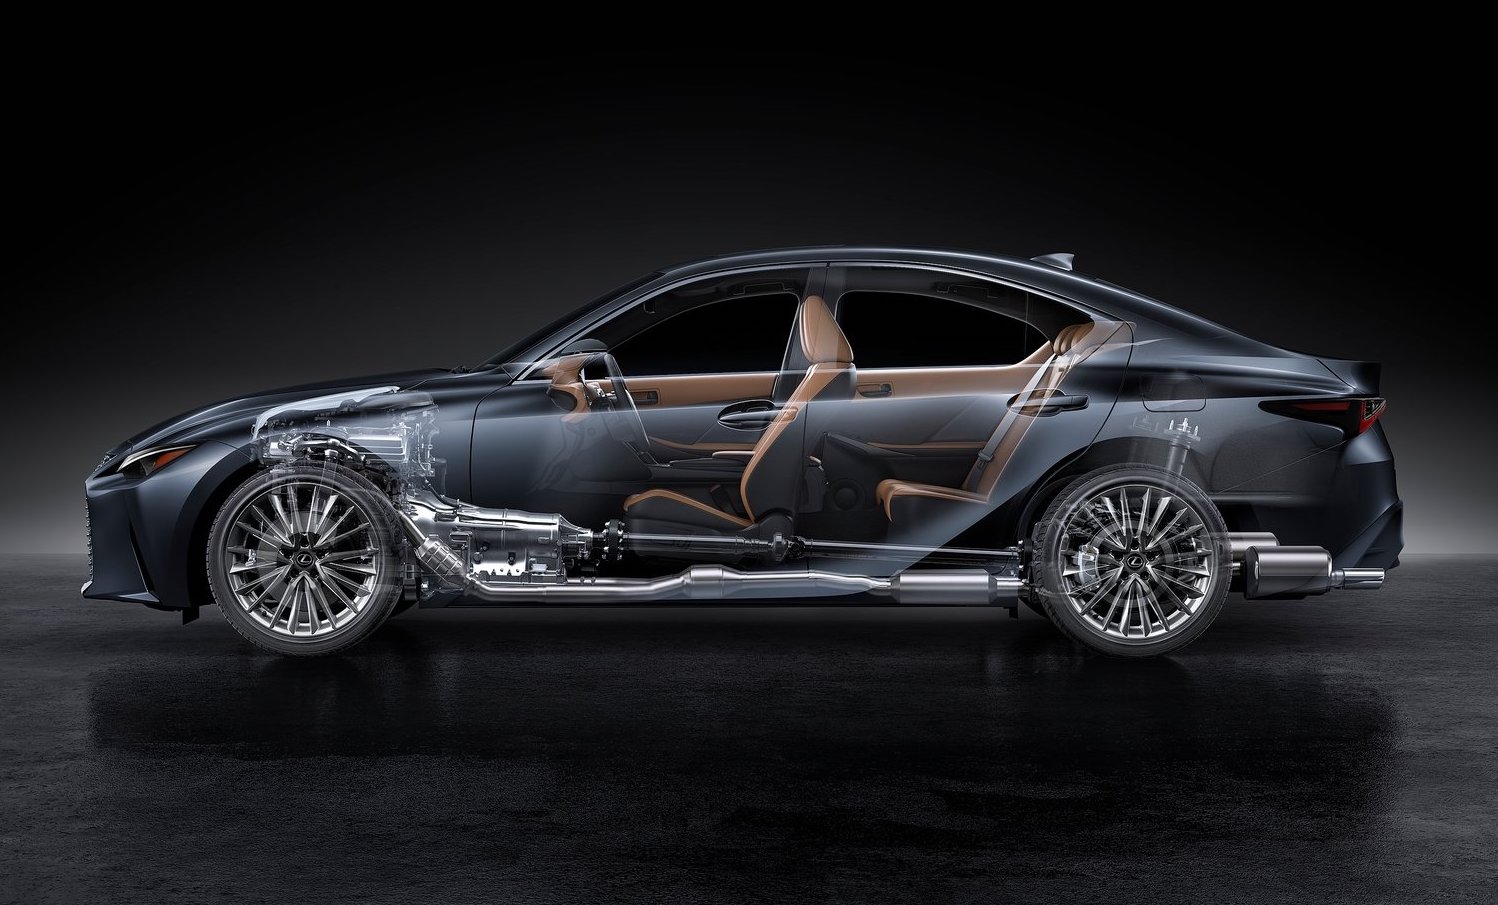 Lexus IS sports sedan 2021 model unveiled +Video - Automacha